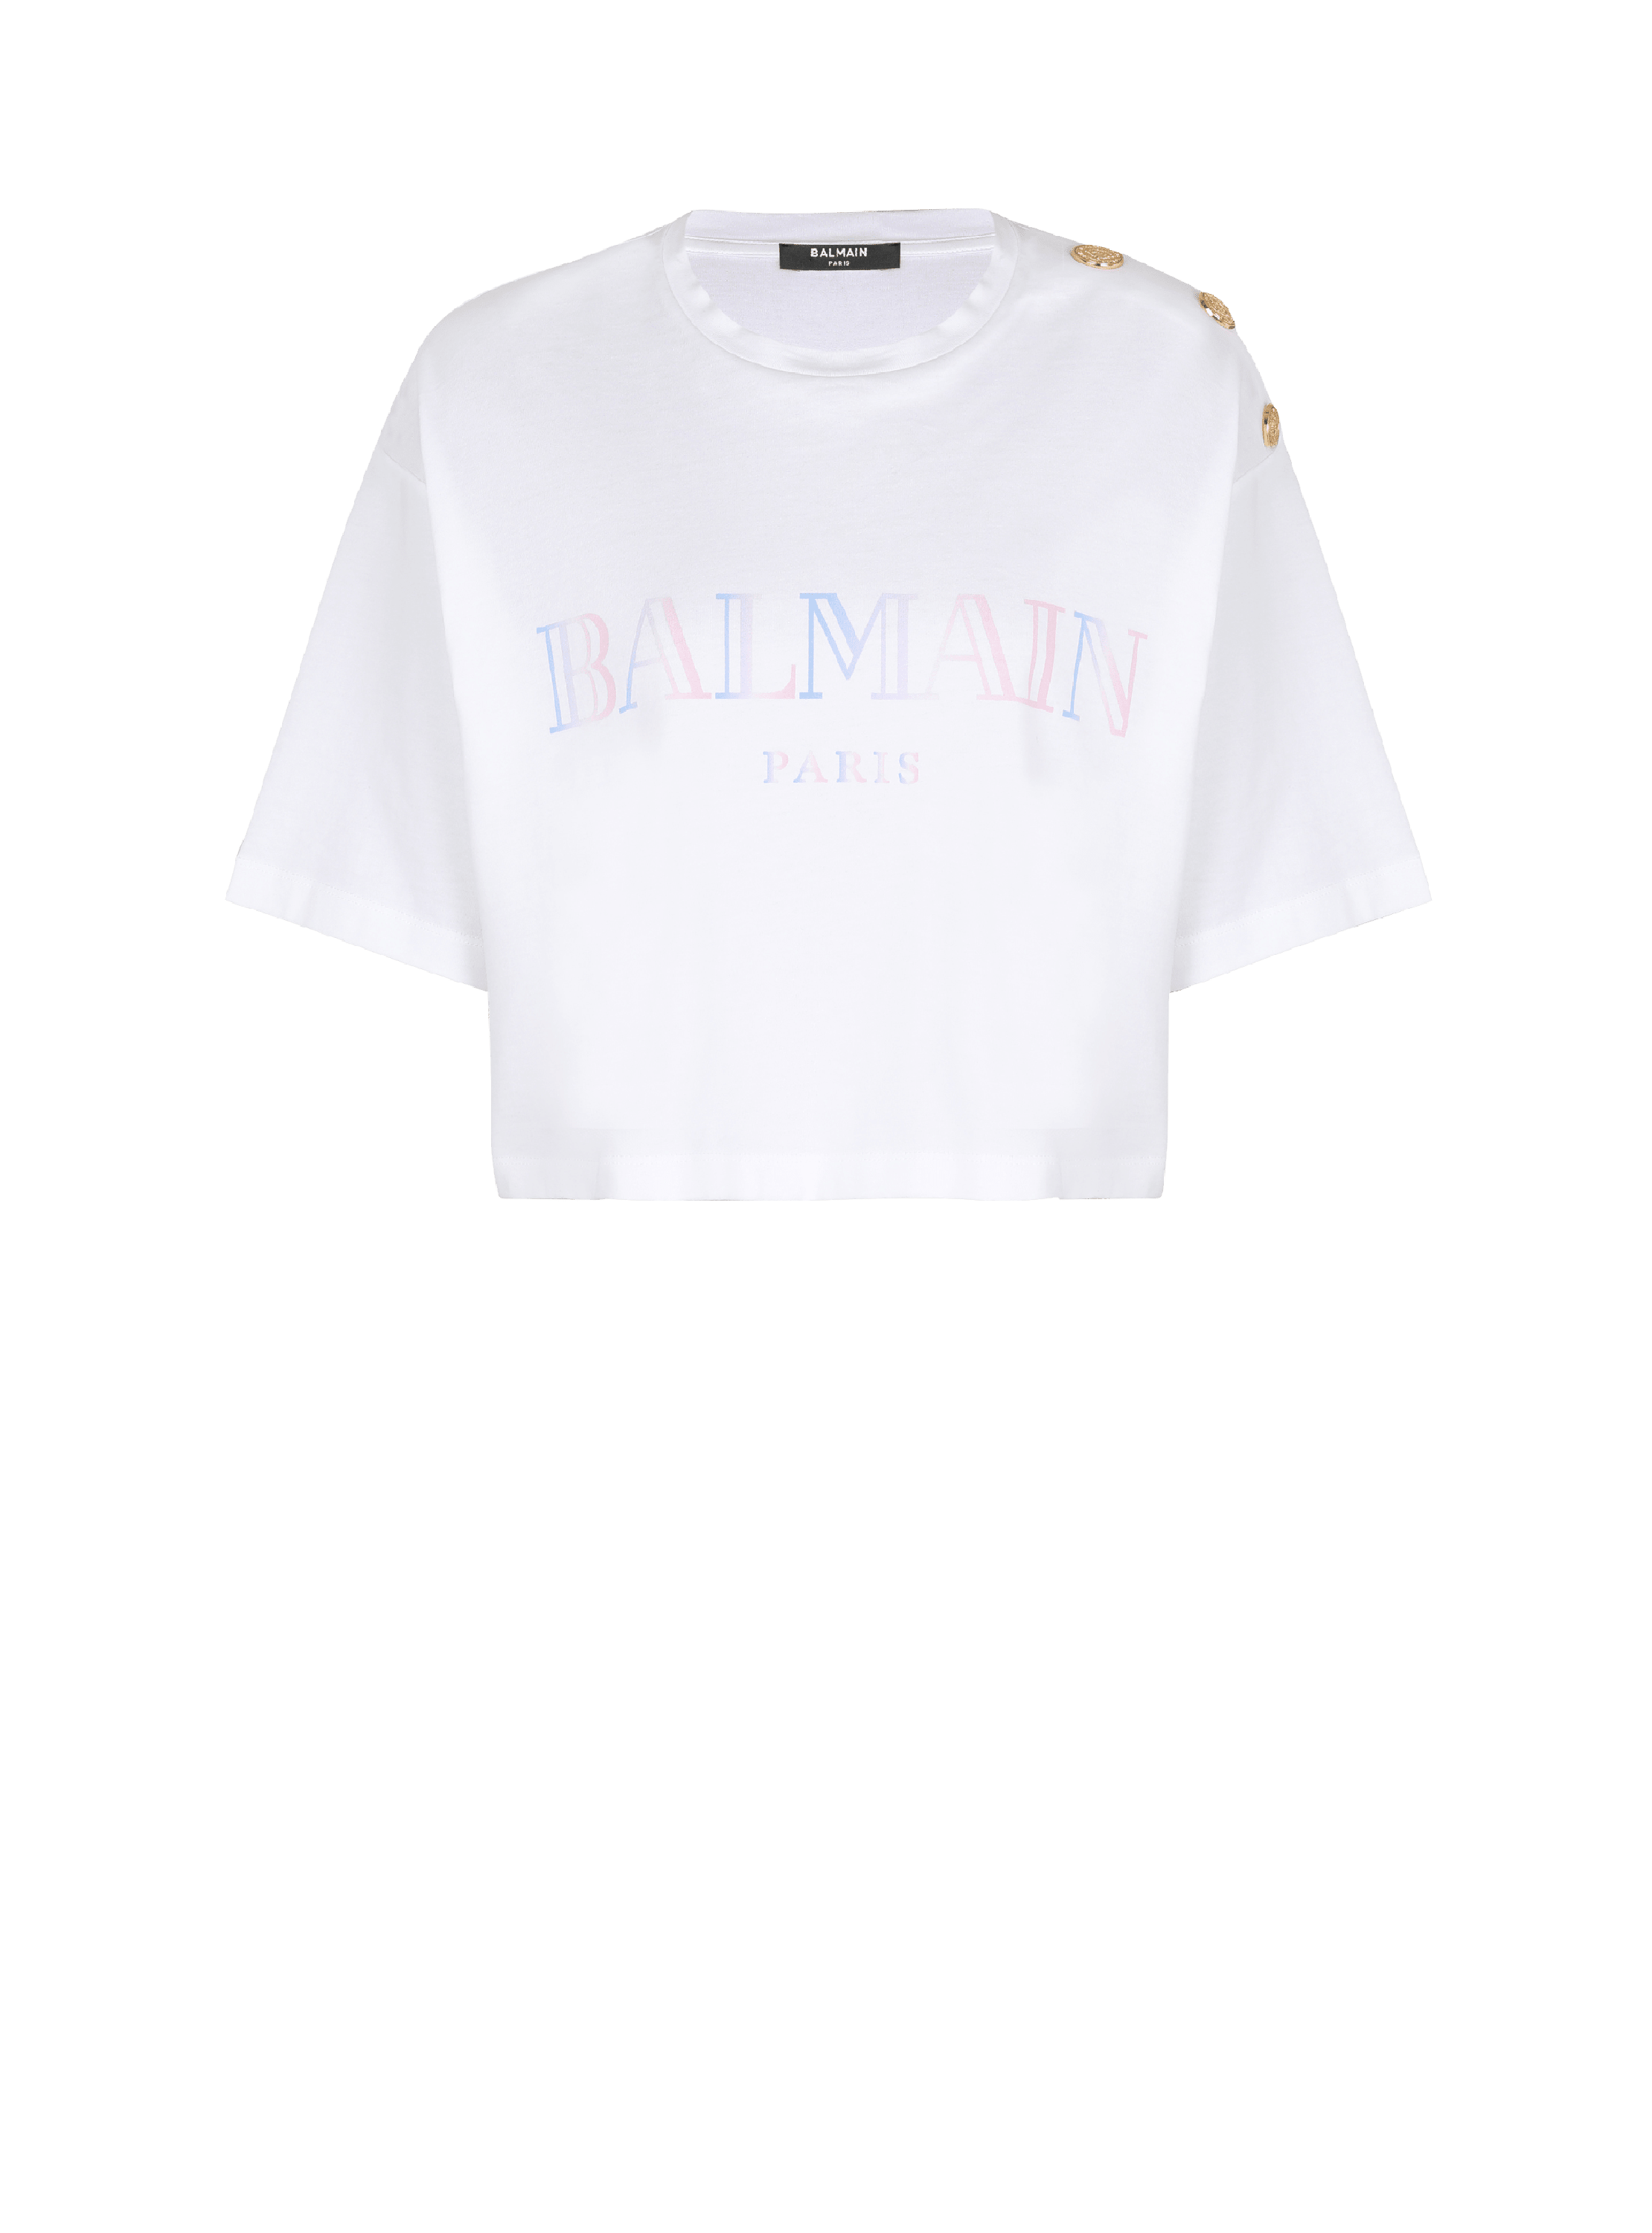 Kurzes T-Shirt mit Balmain-Print im Farbverlauf, WeiB, hi-res